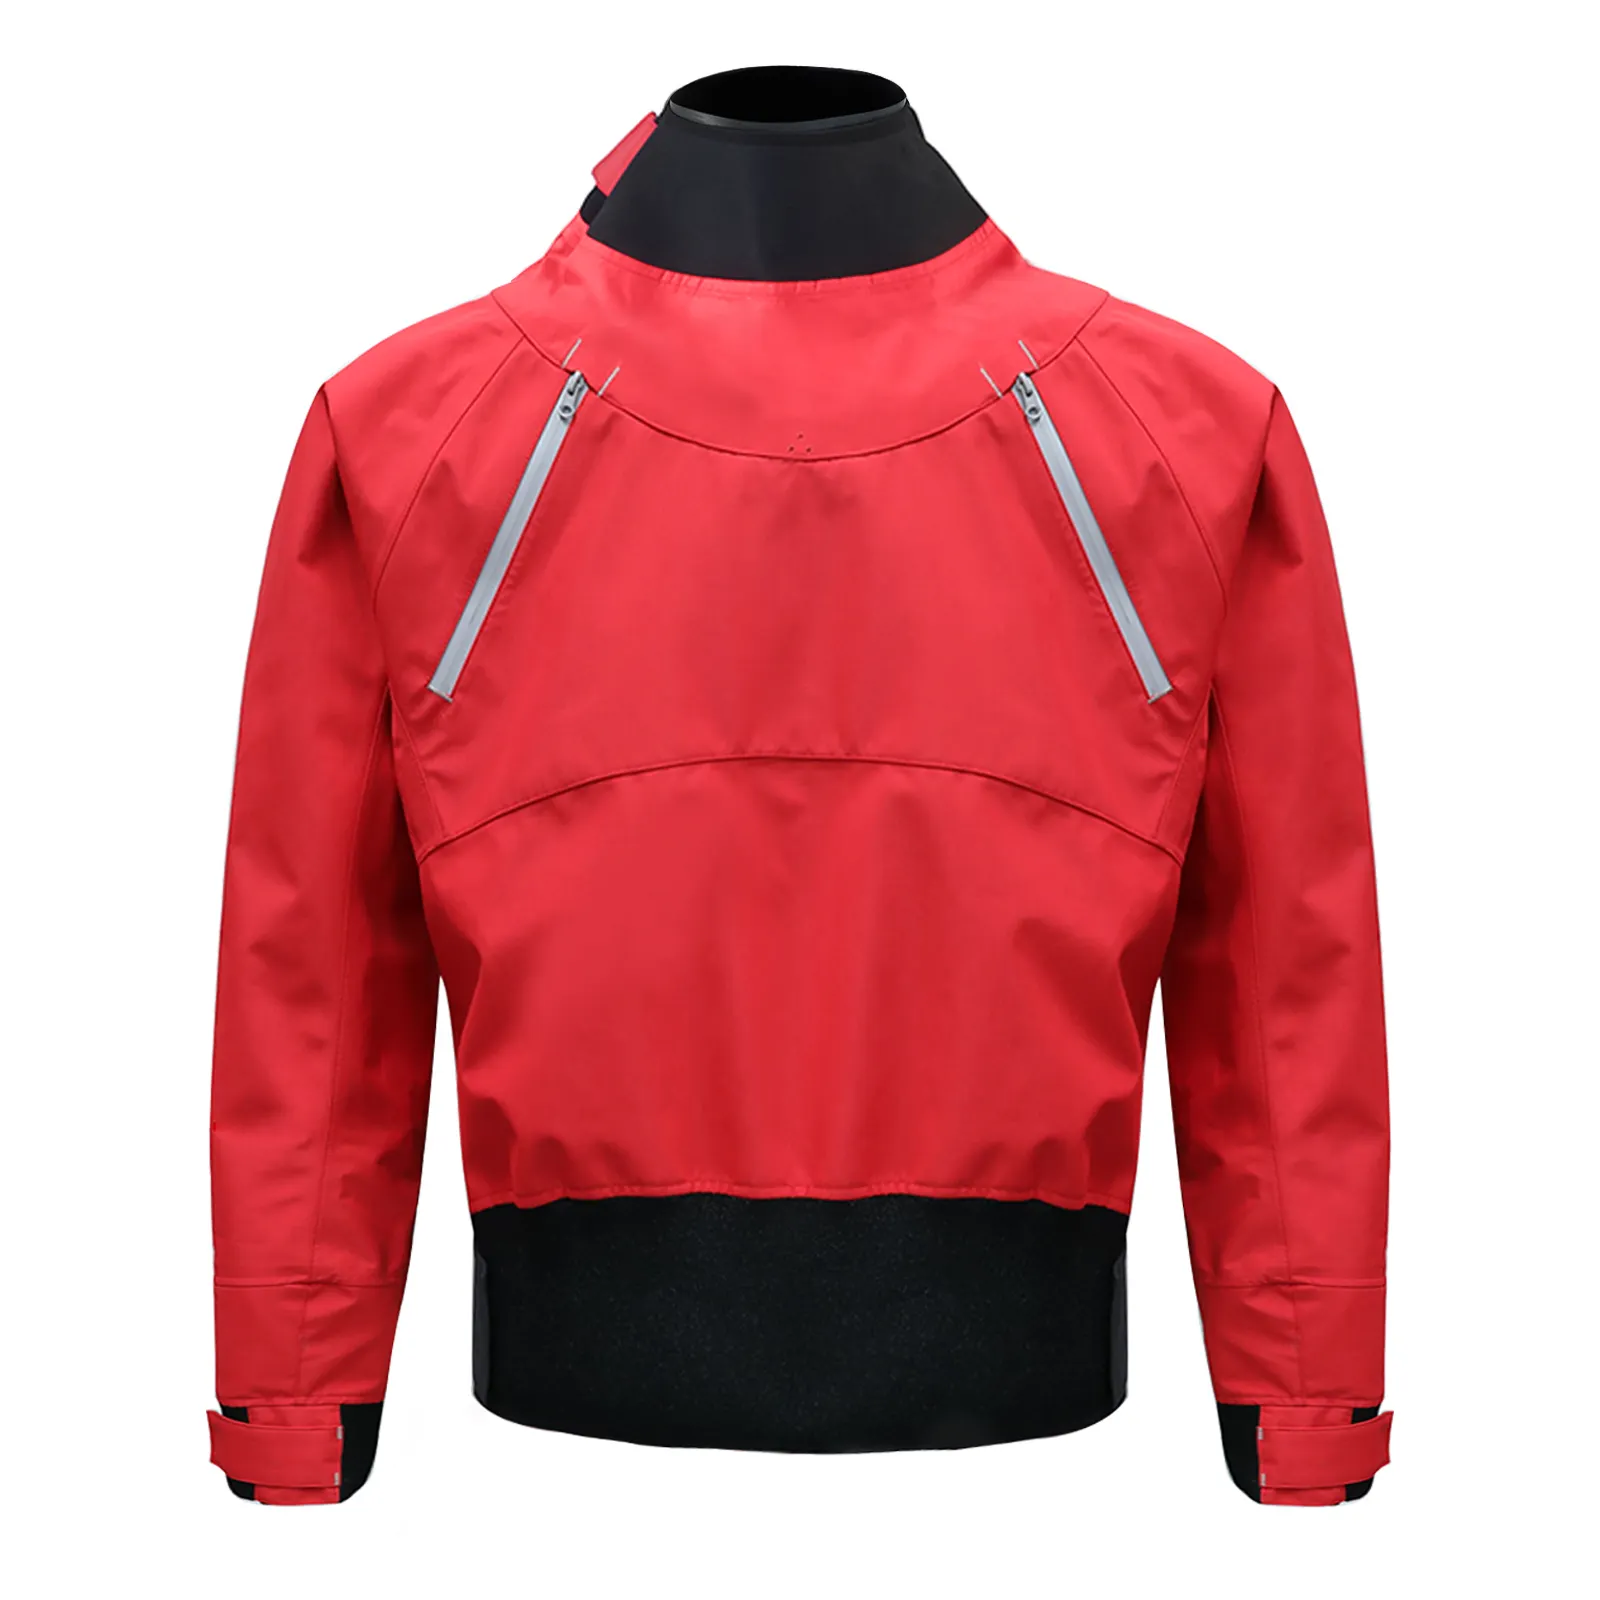 Waterproof and breathable taped dinghy racing spray top sailing jacket long sleeve kayak dry splash top paddle jacket